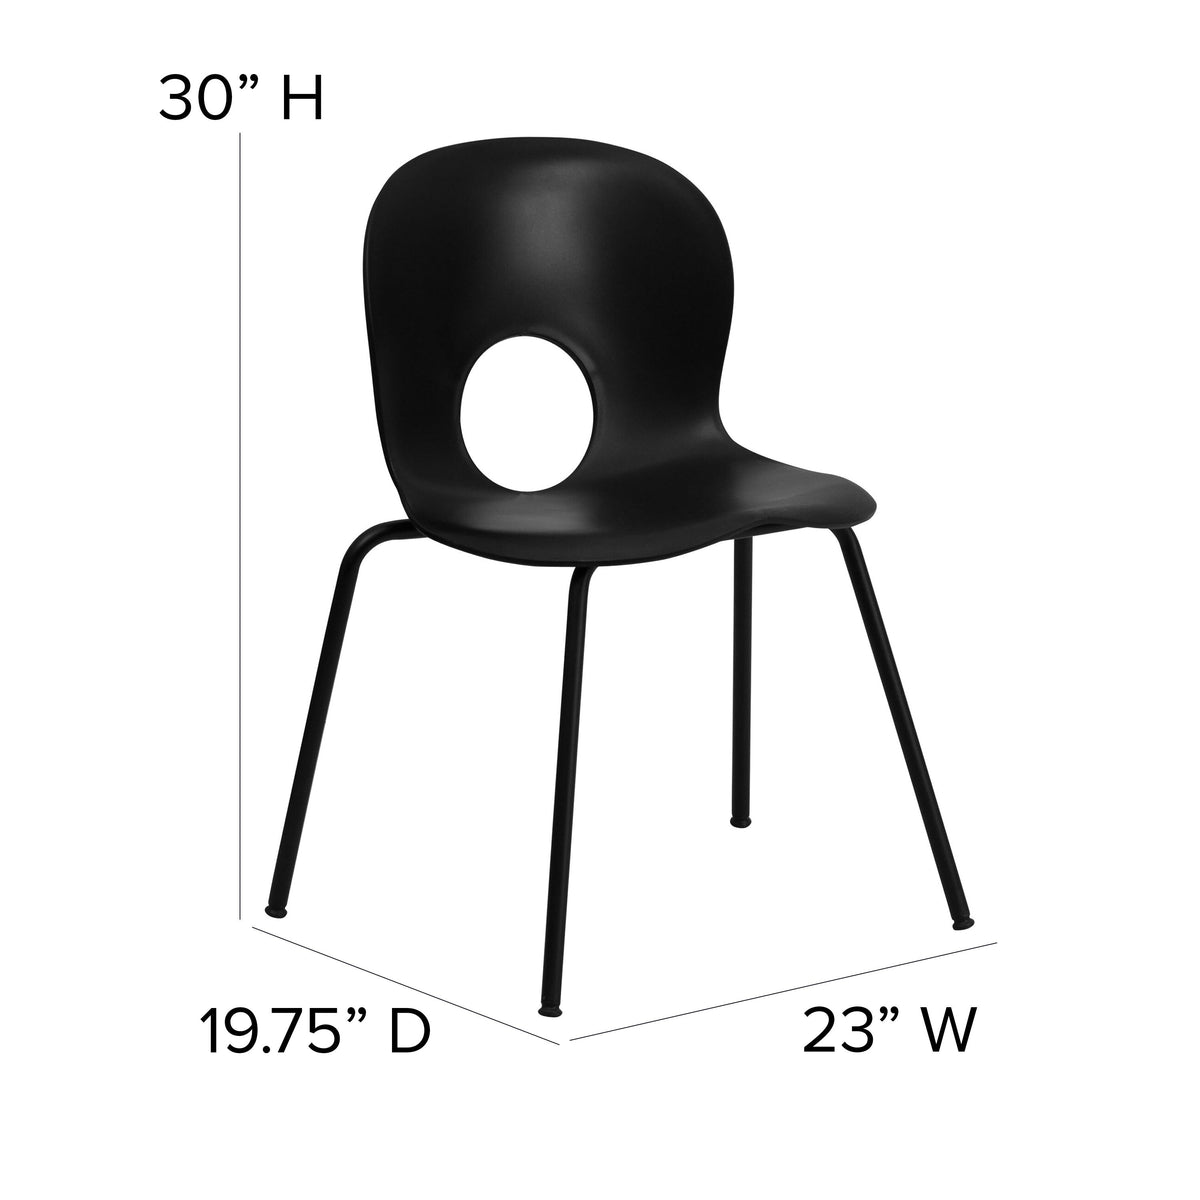 Black |#| 770 lb. Capacity Designer Black Plastic Stack Chair with Black Frame